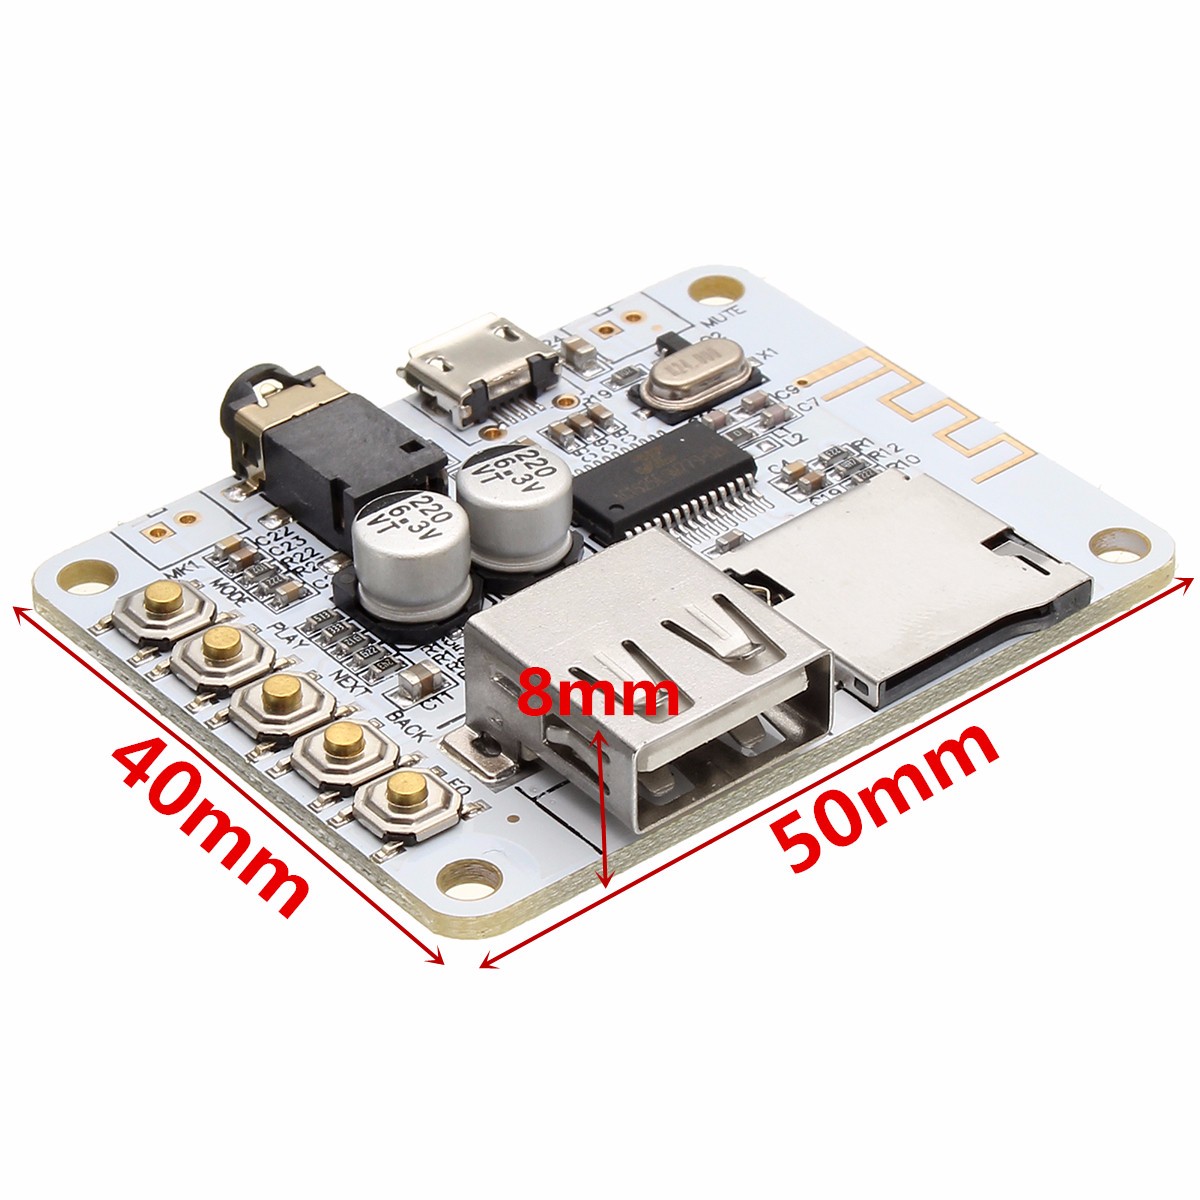 SANWUreg-bluetooth-Audio-Receiver-Digital-Amplifier-Board-With-USB-Port-TF-Card-Slot-Decoding-Play-1071306